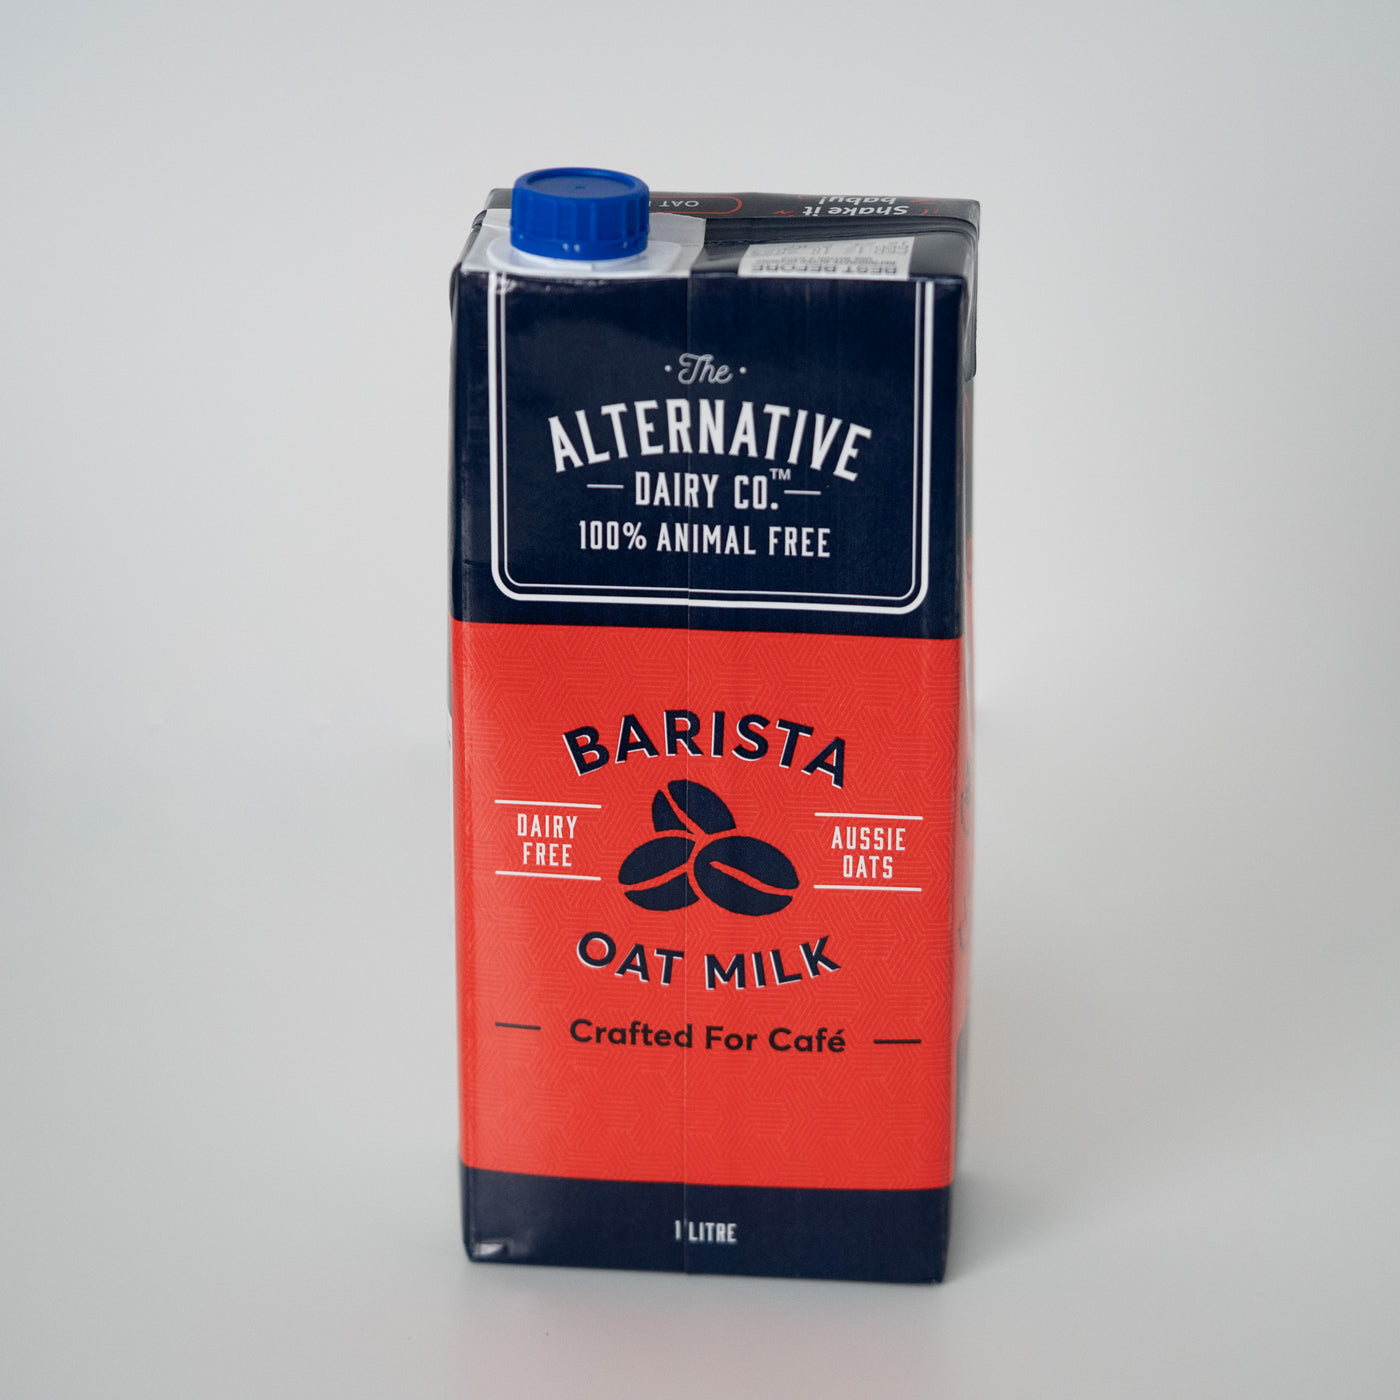 The Alternative Dairy Co Barista Oat Milk